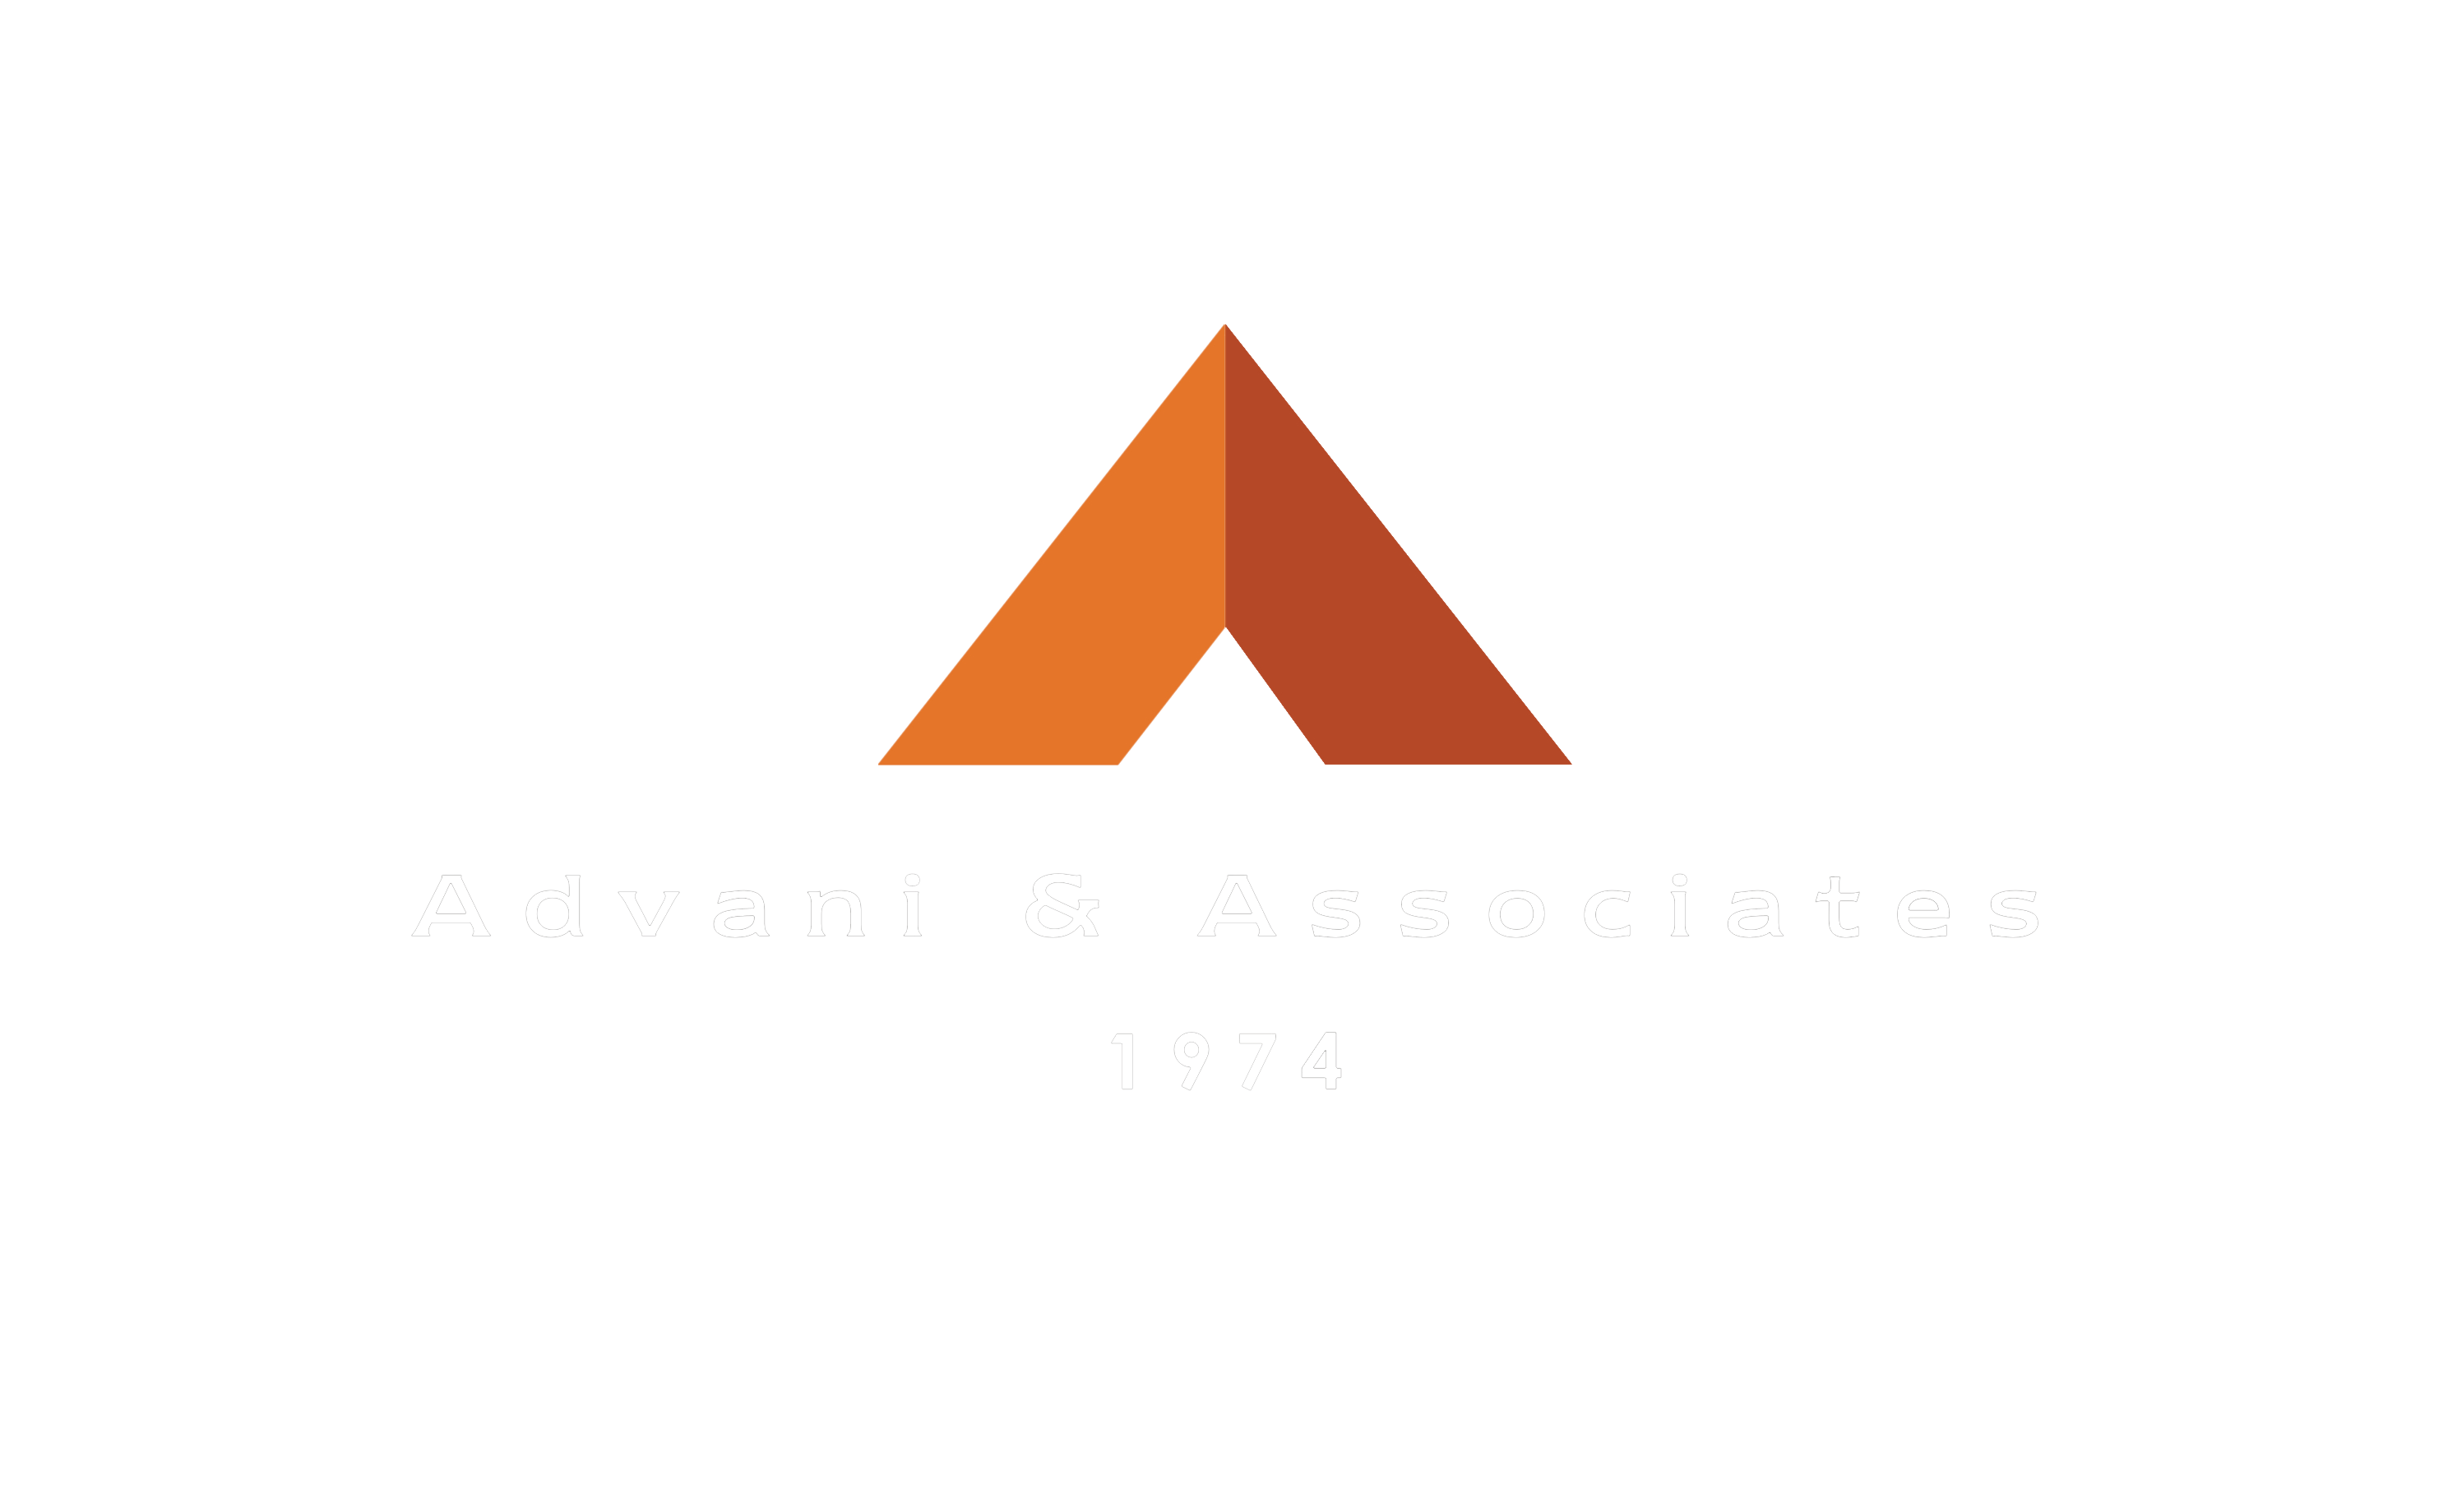 Advani and Associates